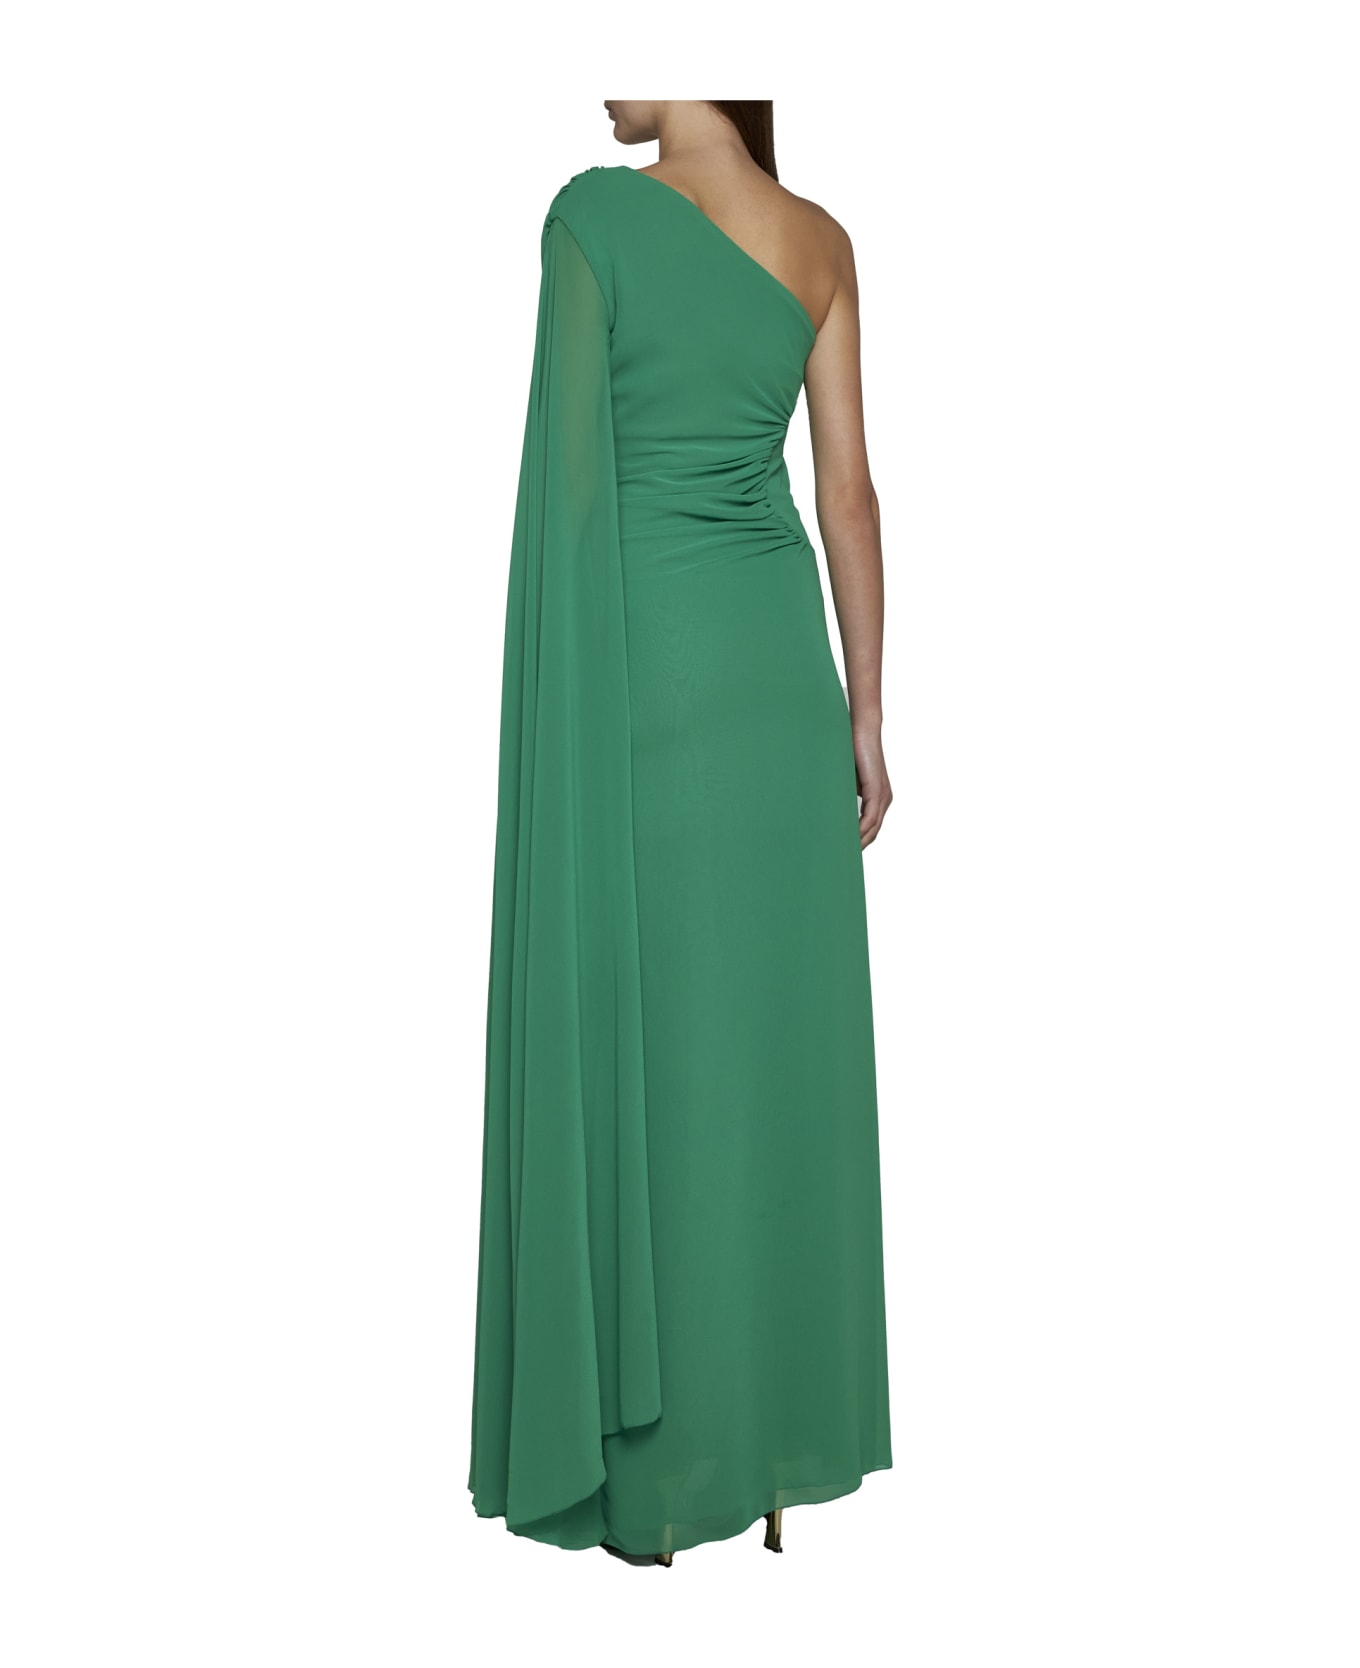 Blanca Vita Dress - Smeraldo